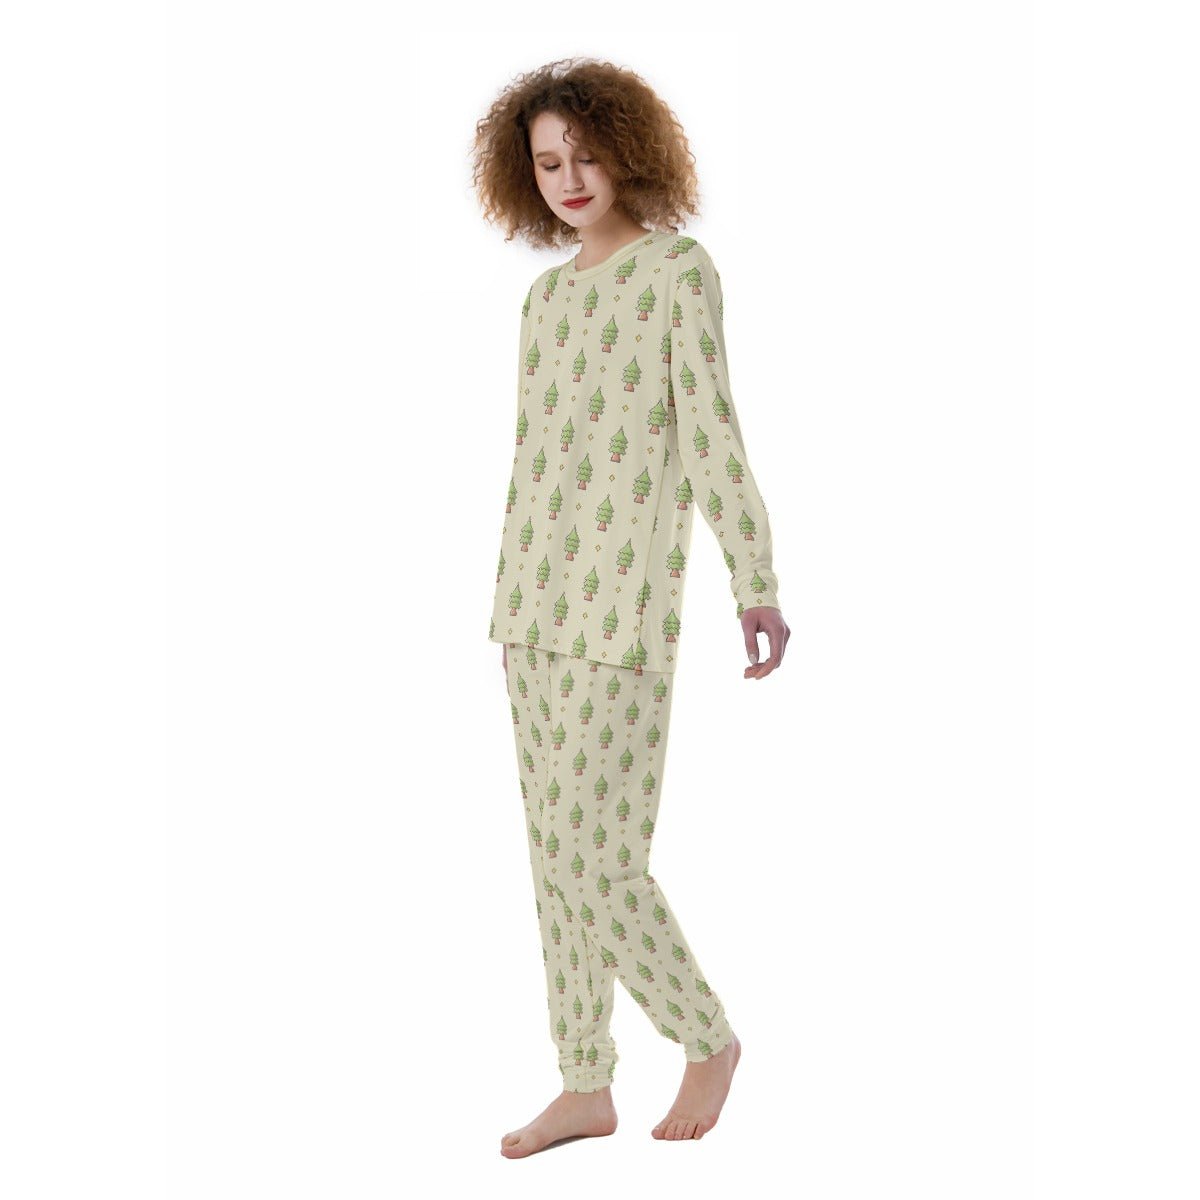 Women's Christmas Pyjamas - 16-bit Christmas - Festive Style